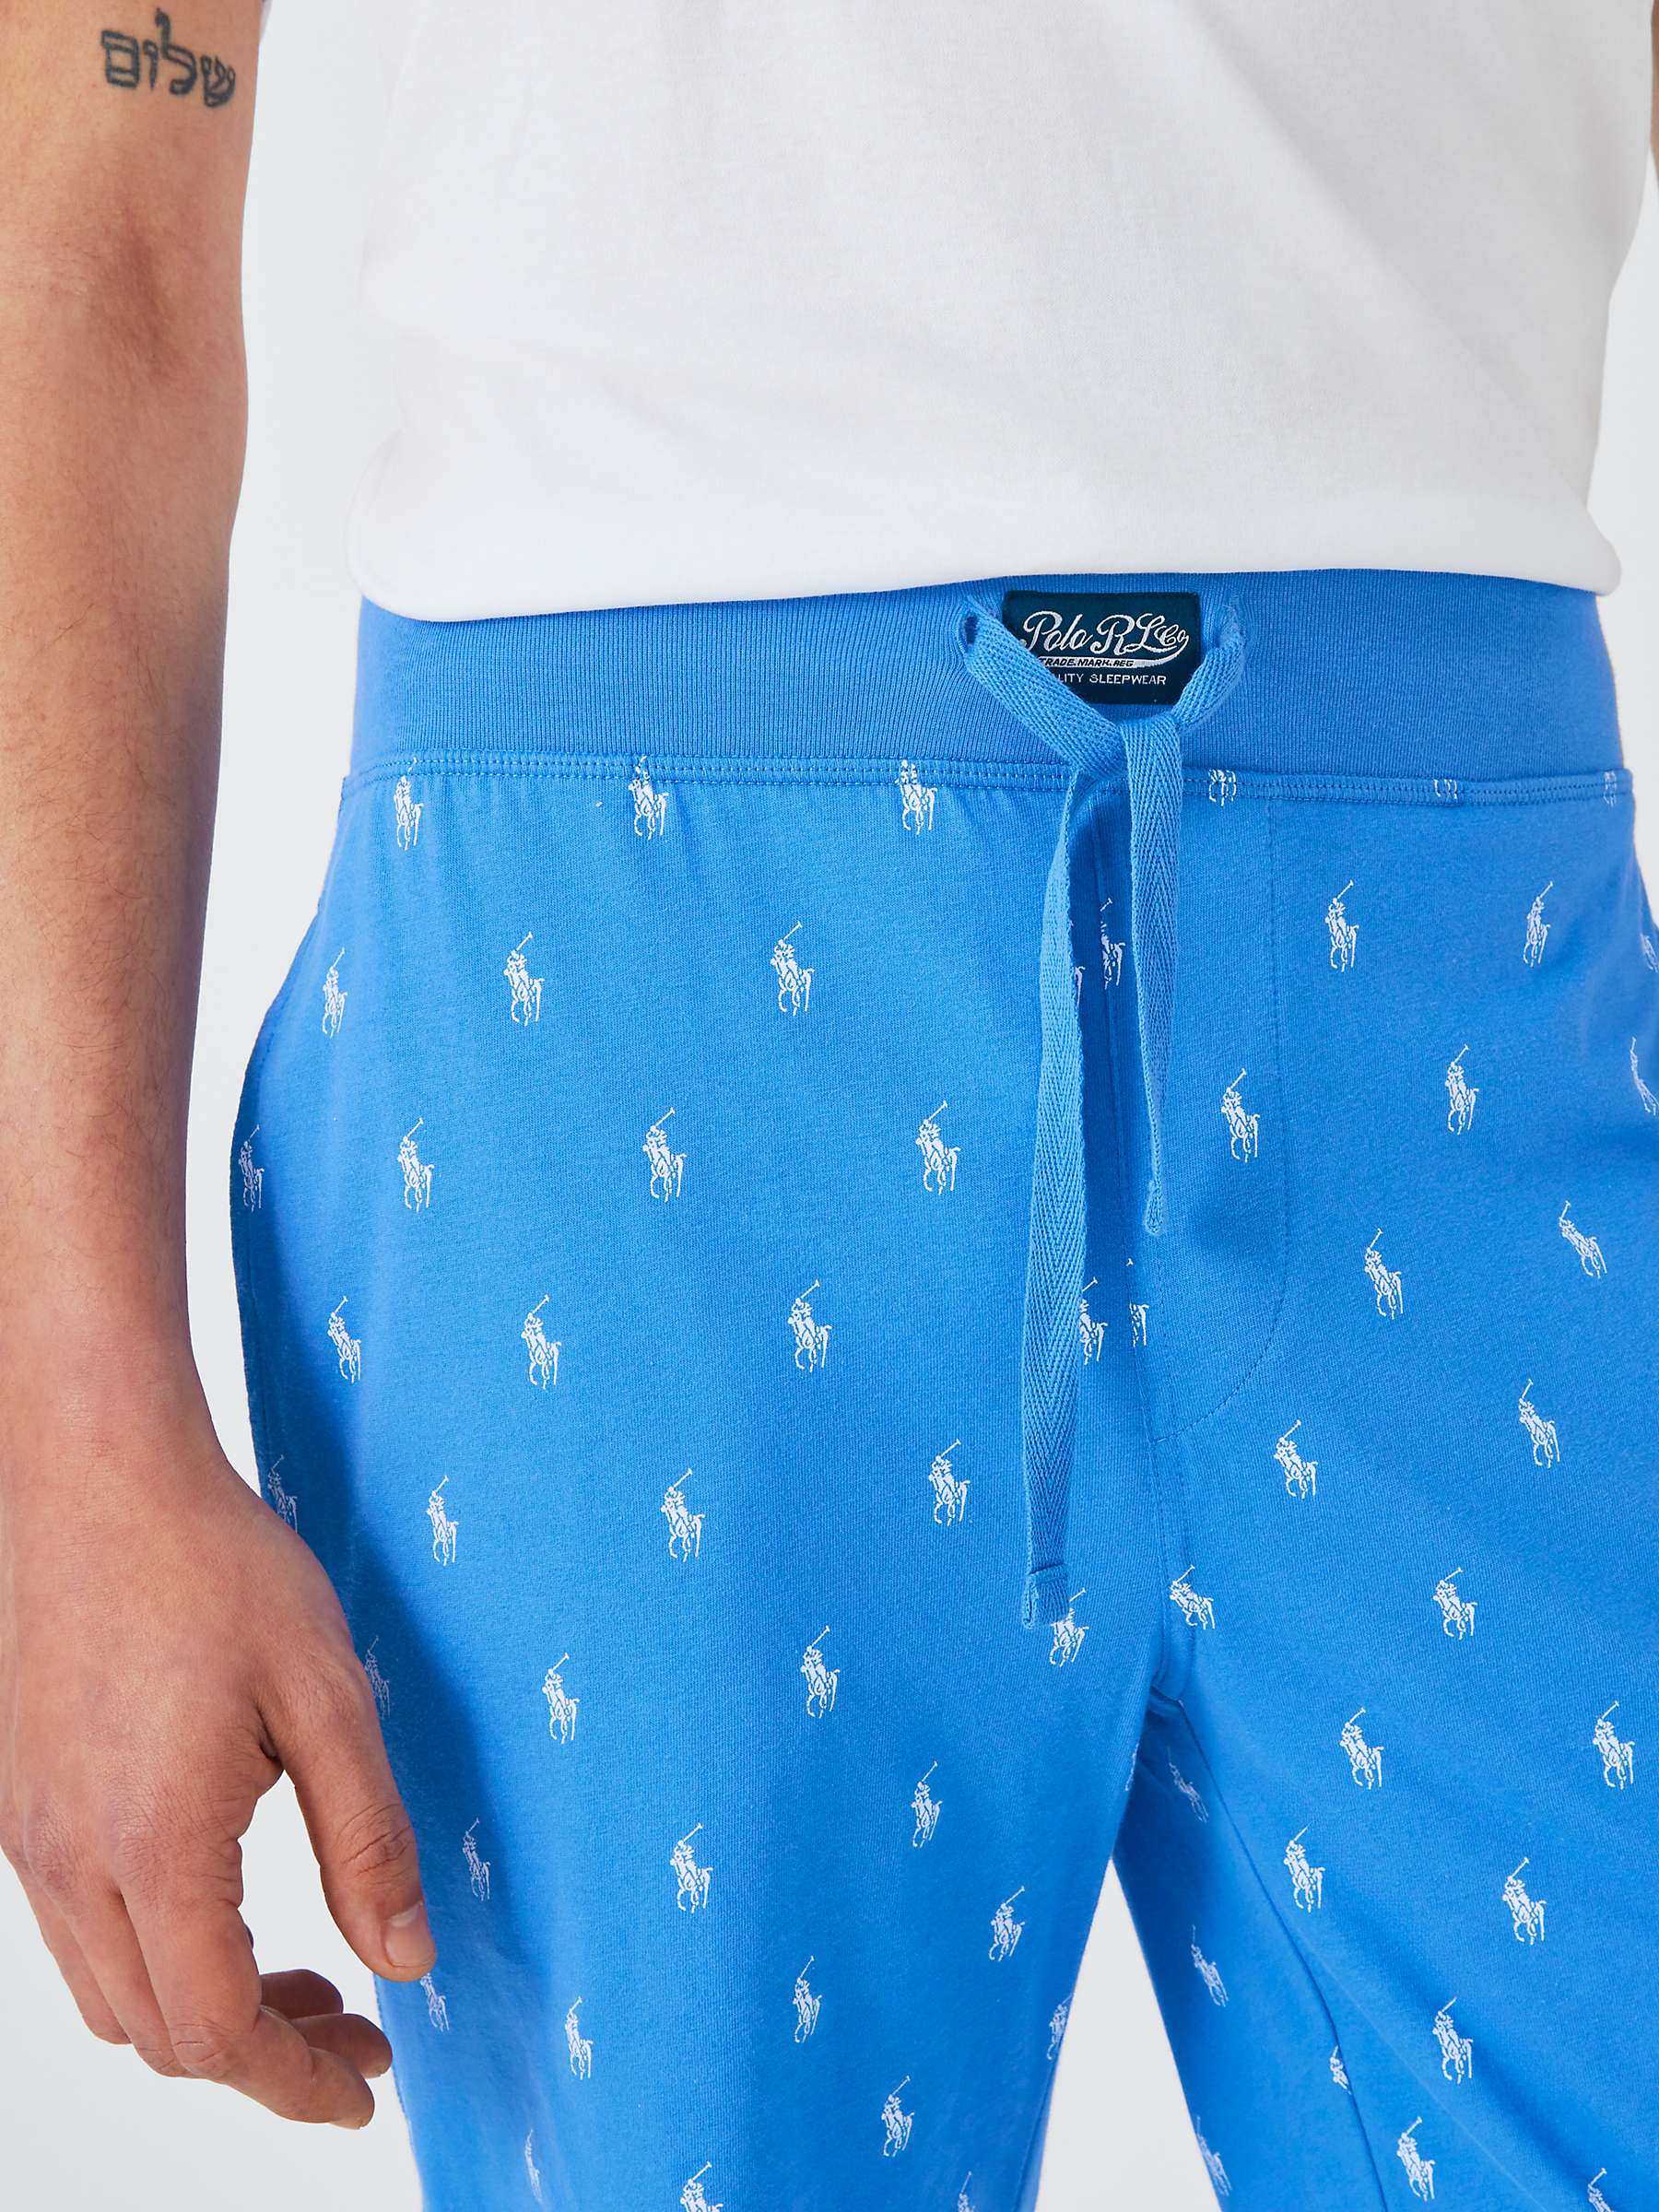 Buy Ralph Lauren All-Over Pony Cotton Jersey Sleep Shorts, Blue/White Online at johnlewis.com